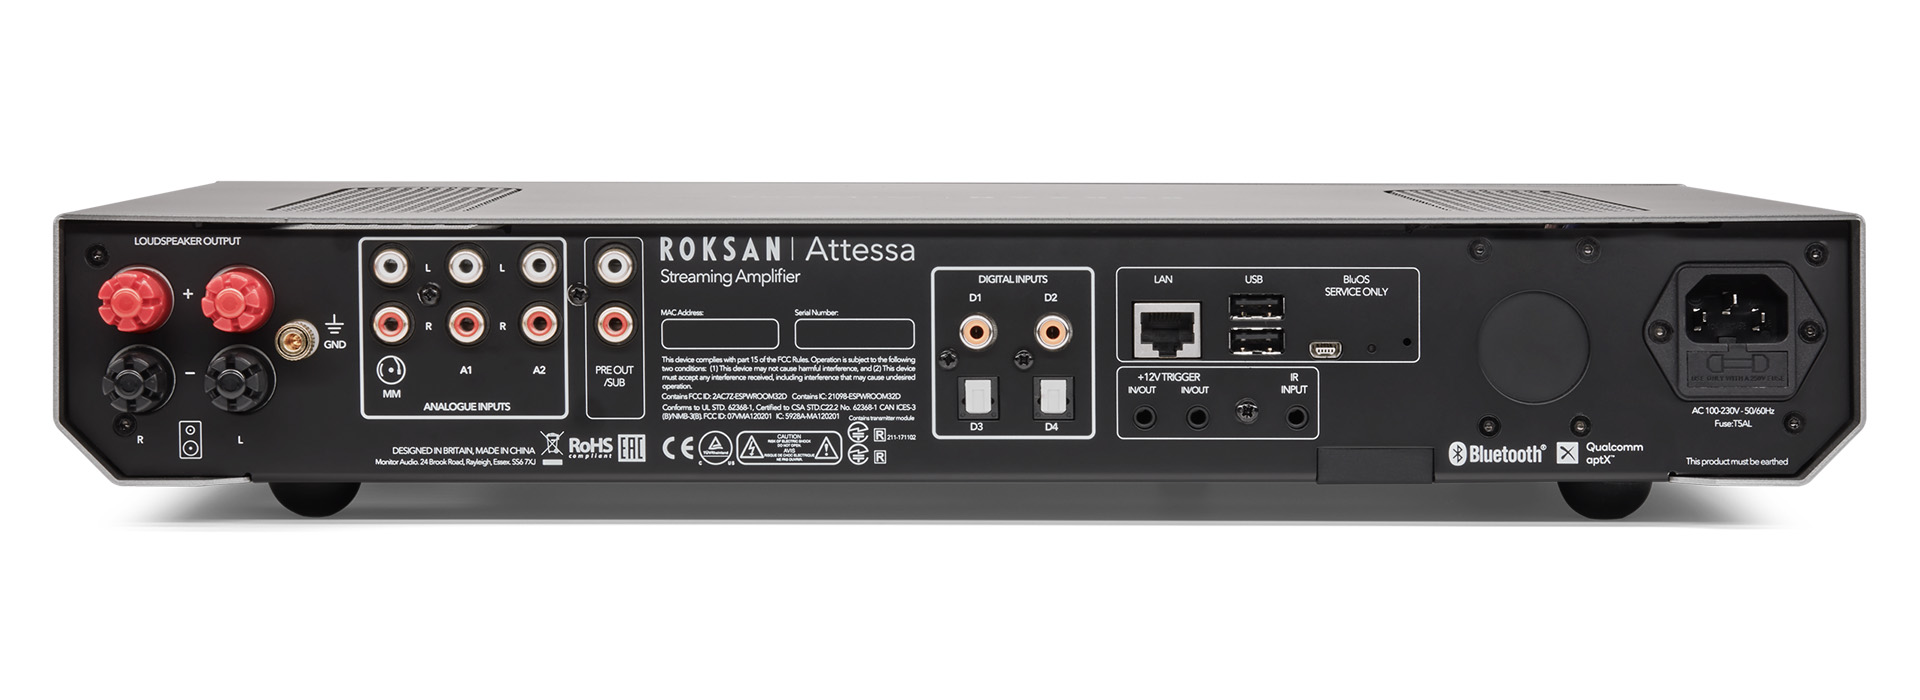 Превосходный драйв и контроль баса: Roksan Attessa Streaming Amplifier